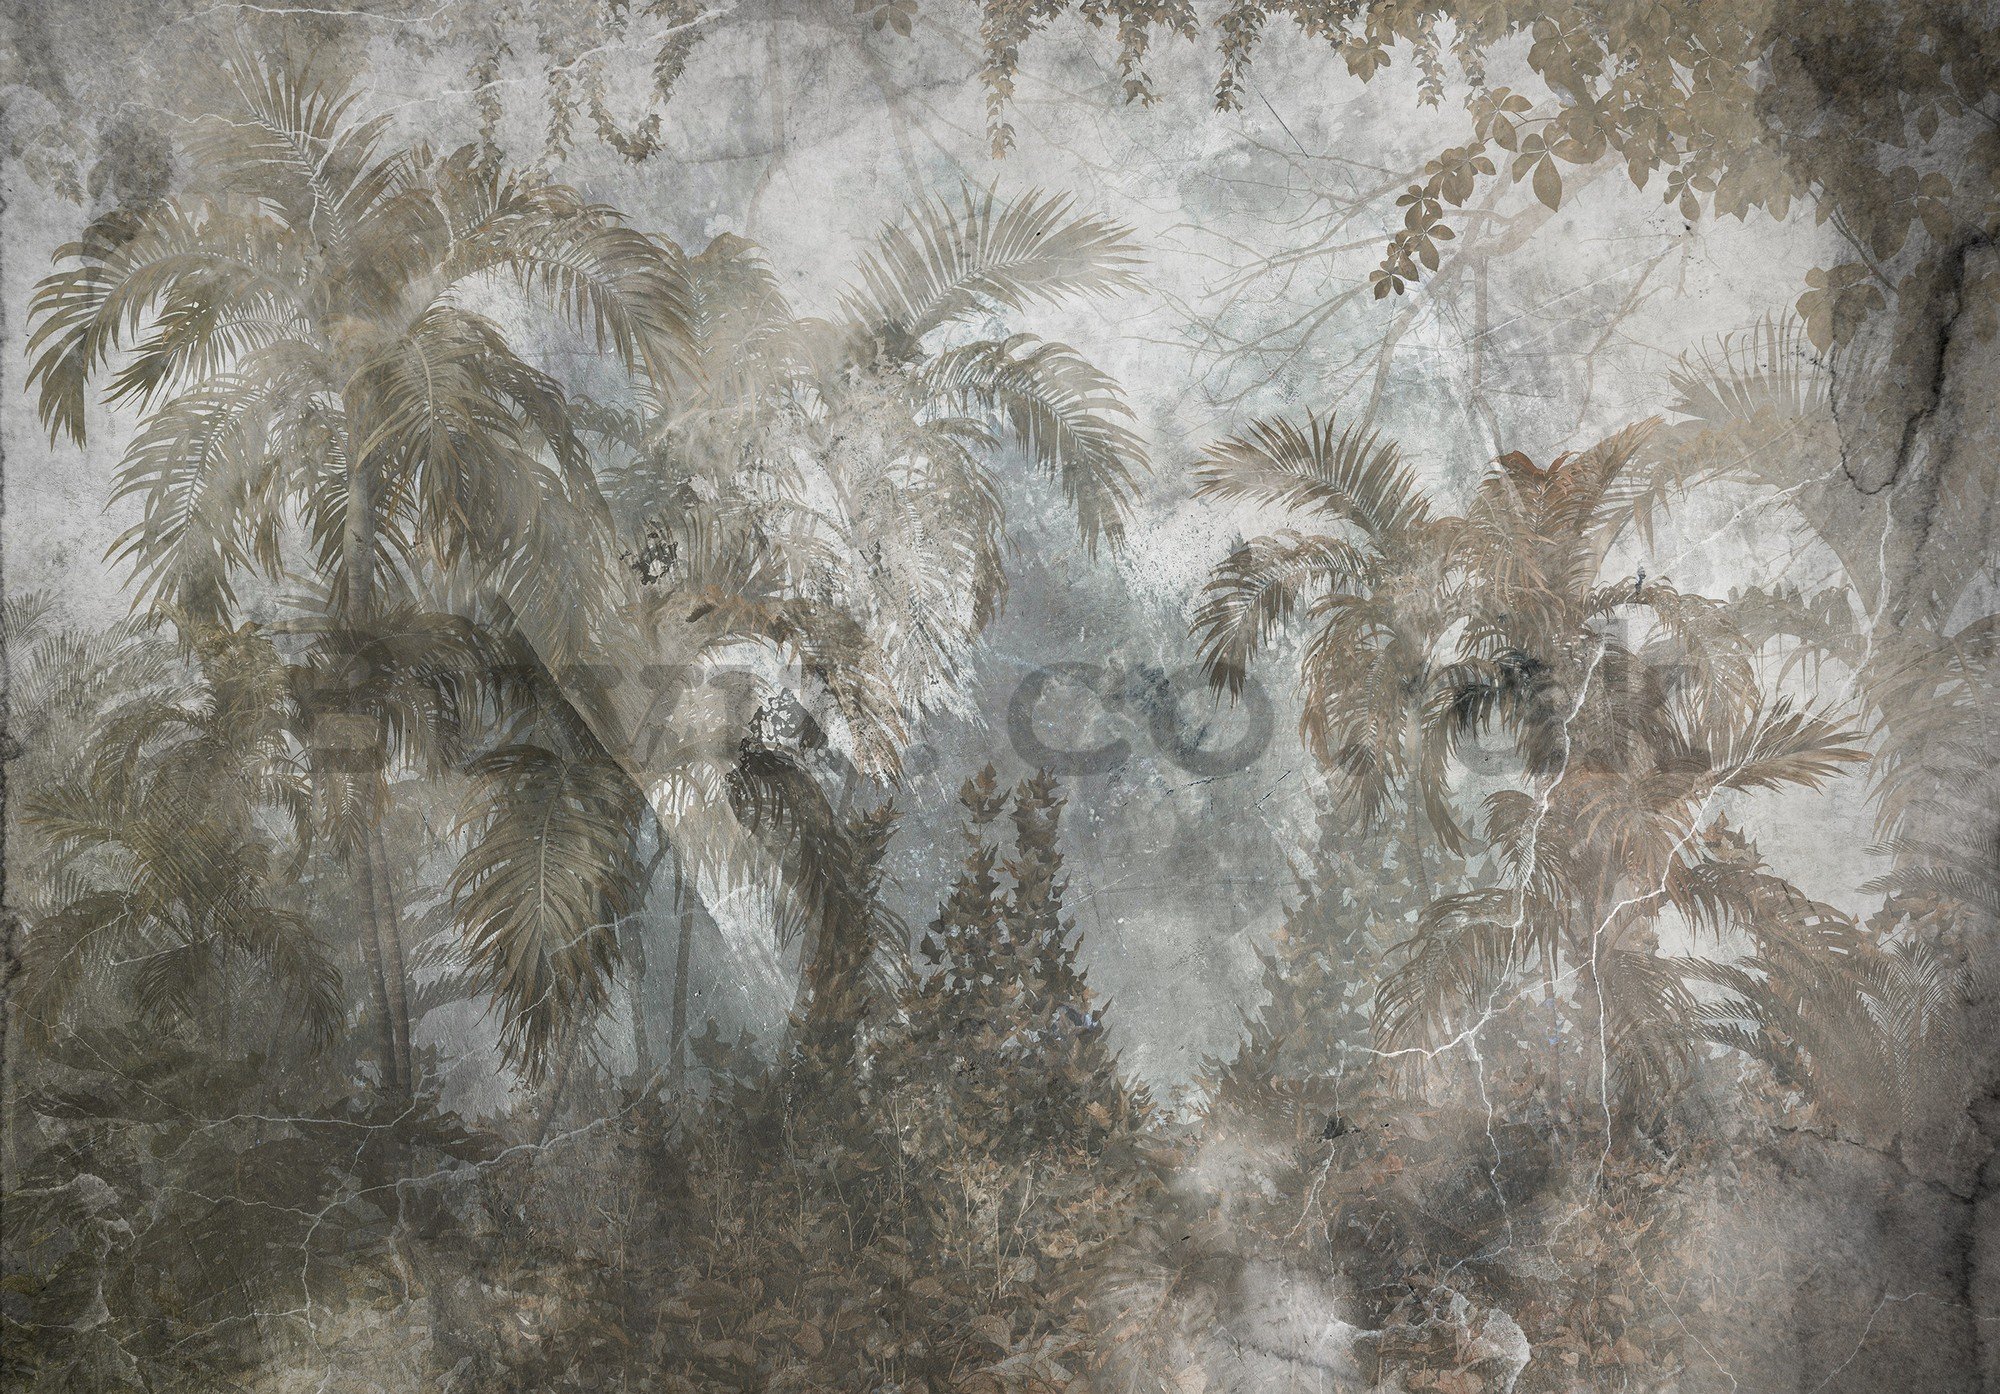 Wall mural vlies: Jungle (concrete imitation) - 254x184 cm